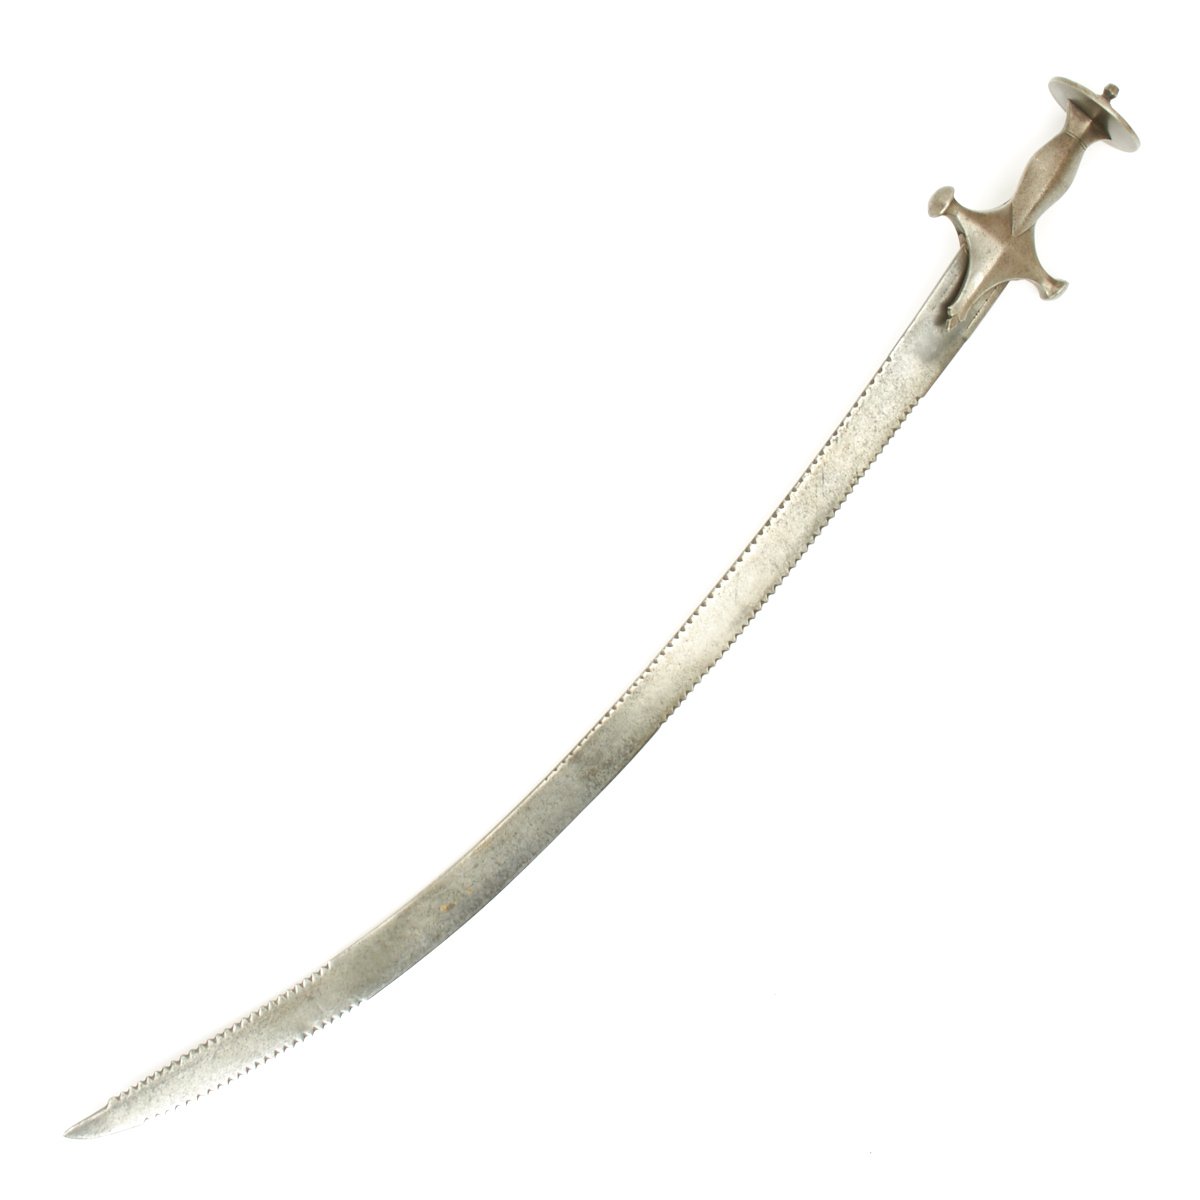 Original Indian 19th Century Tulwar Battle Sword with Serrated